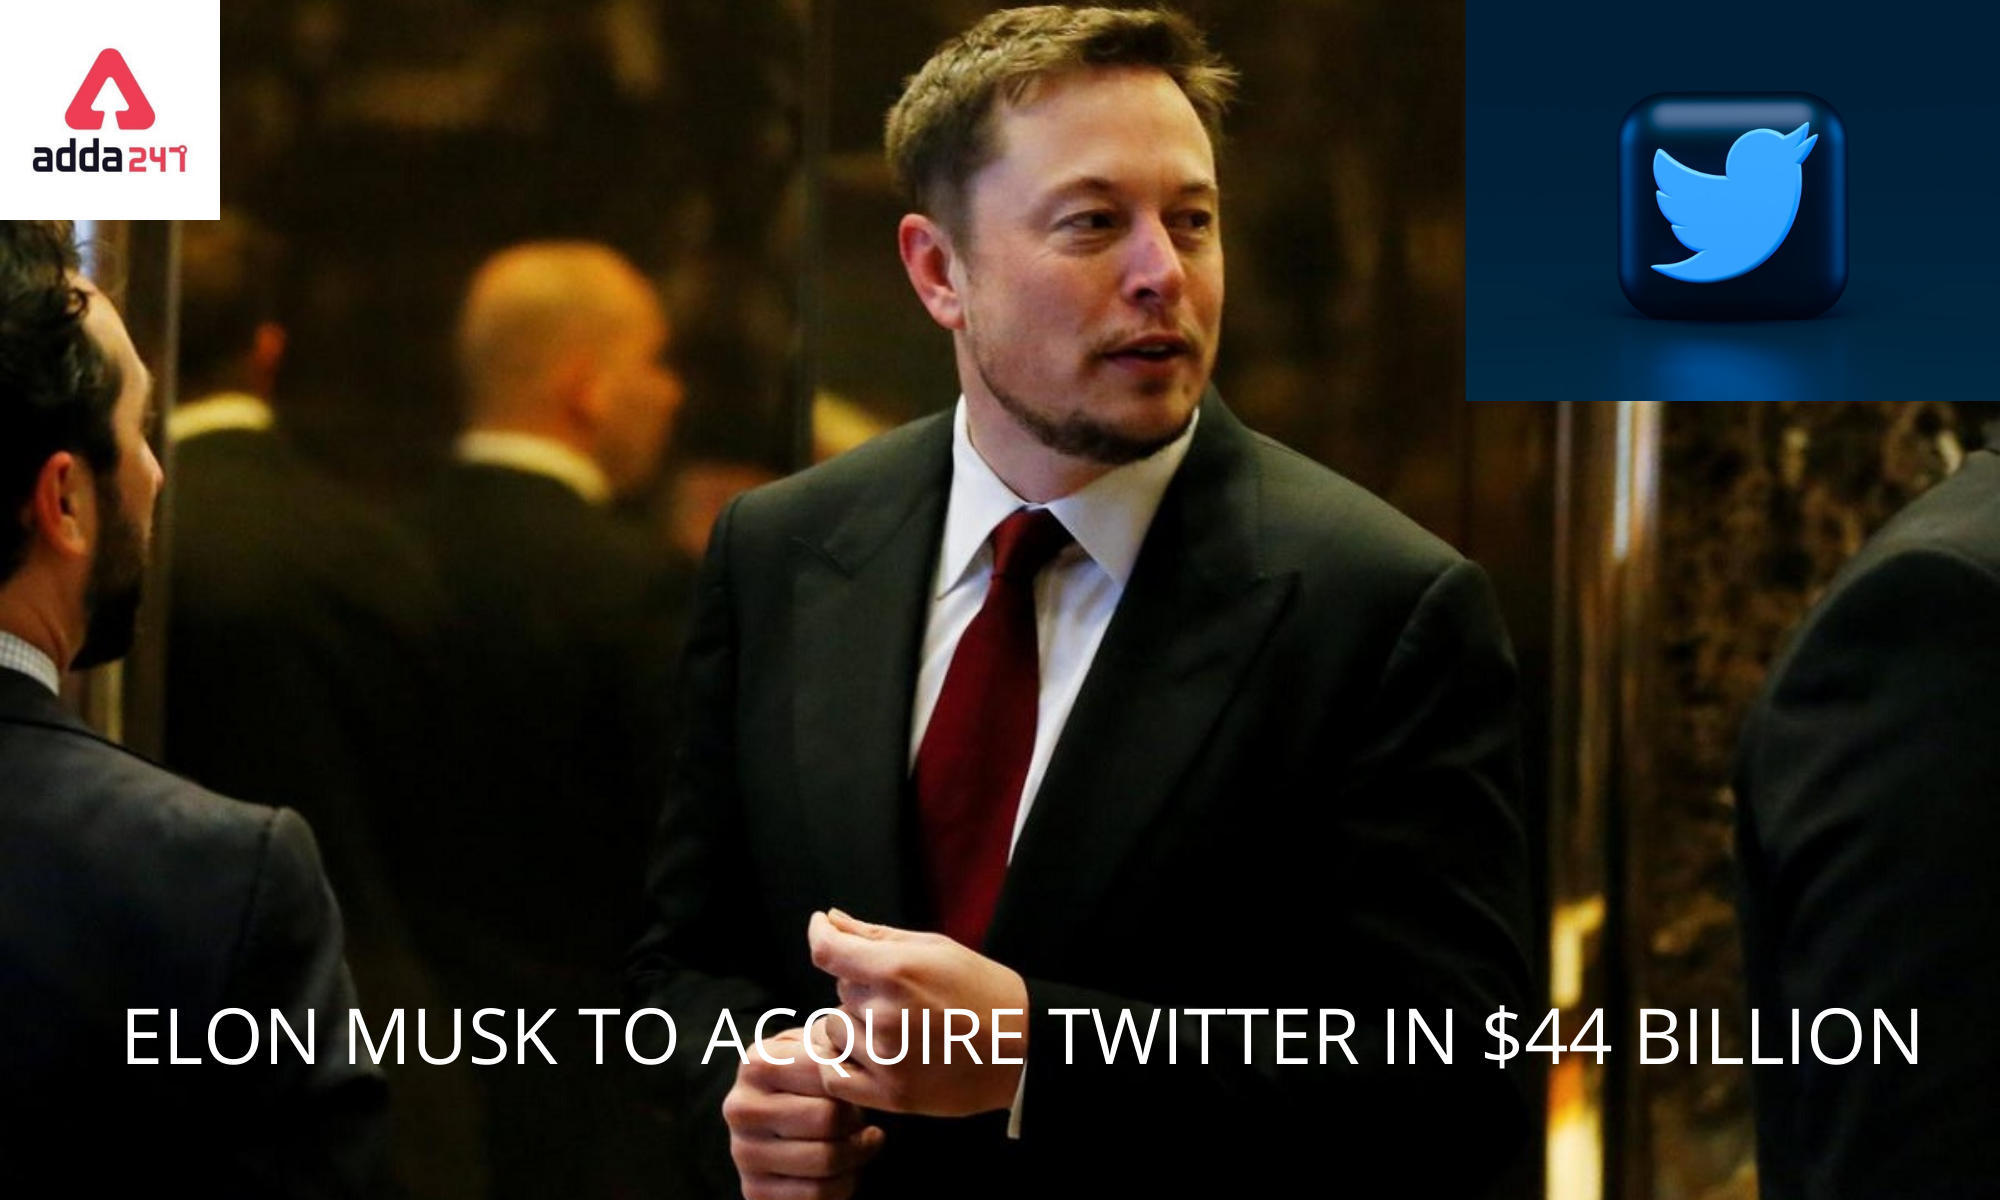 Elon Musk to acquire Twitter in $44 Billion 2022